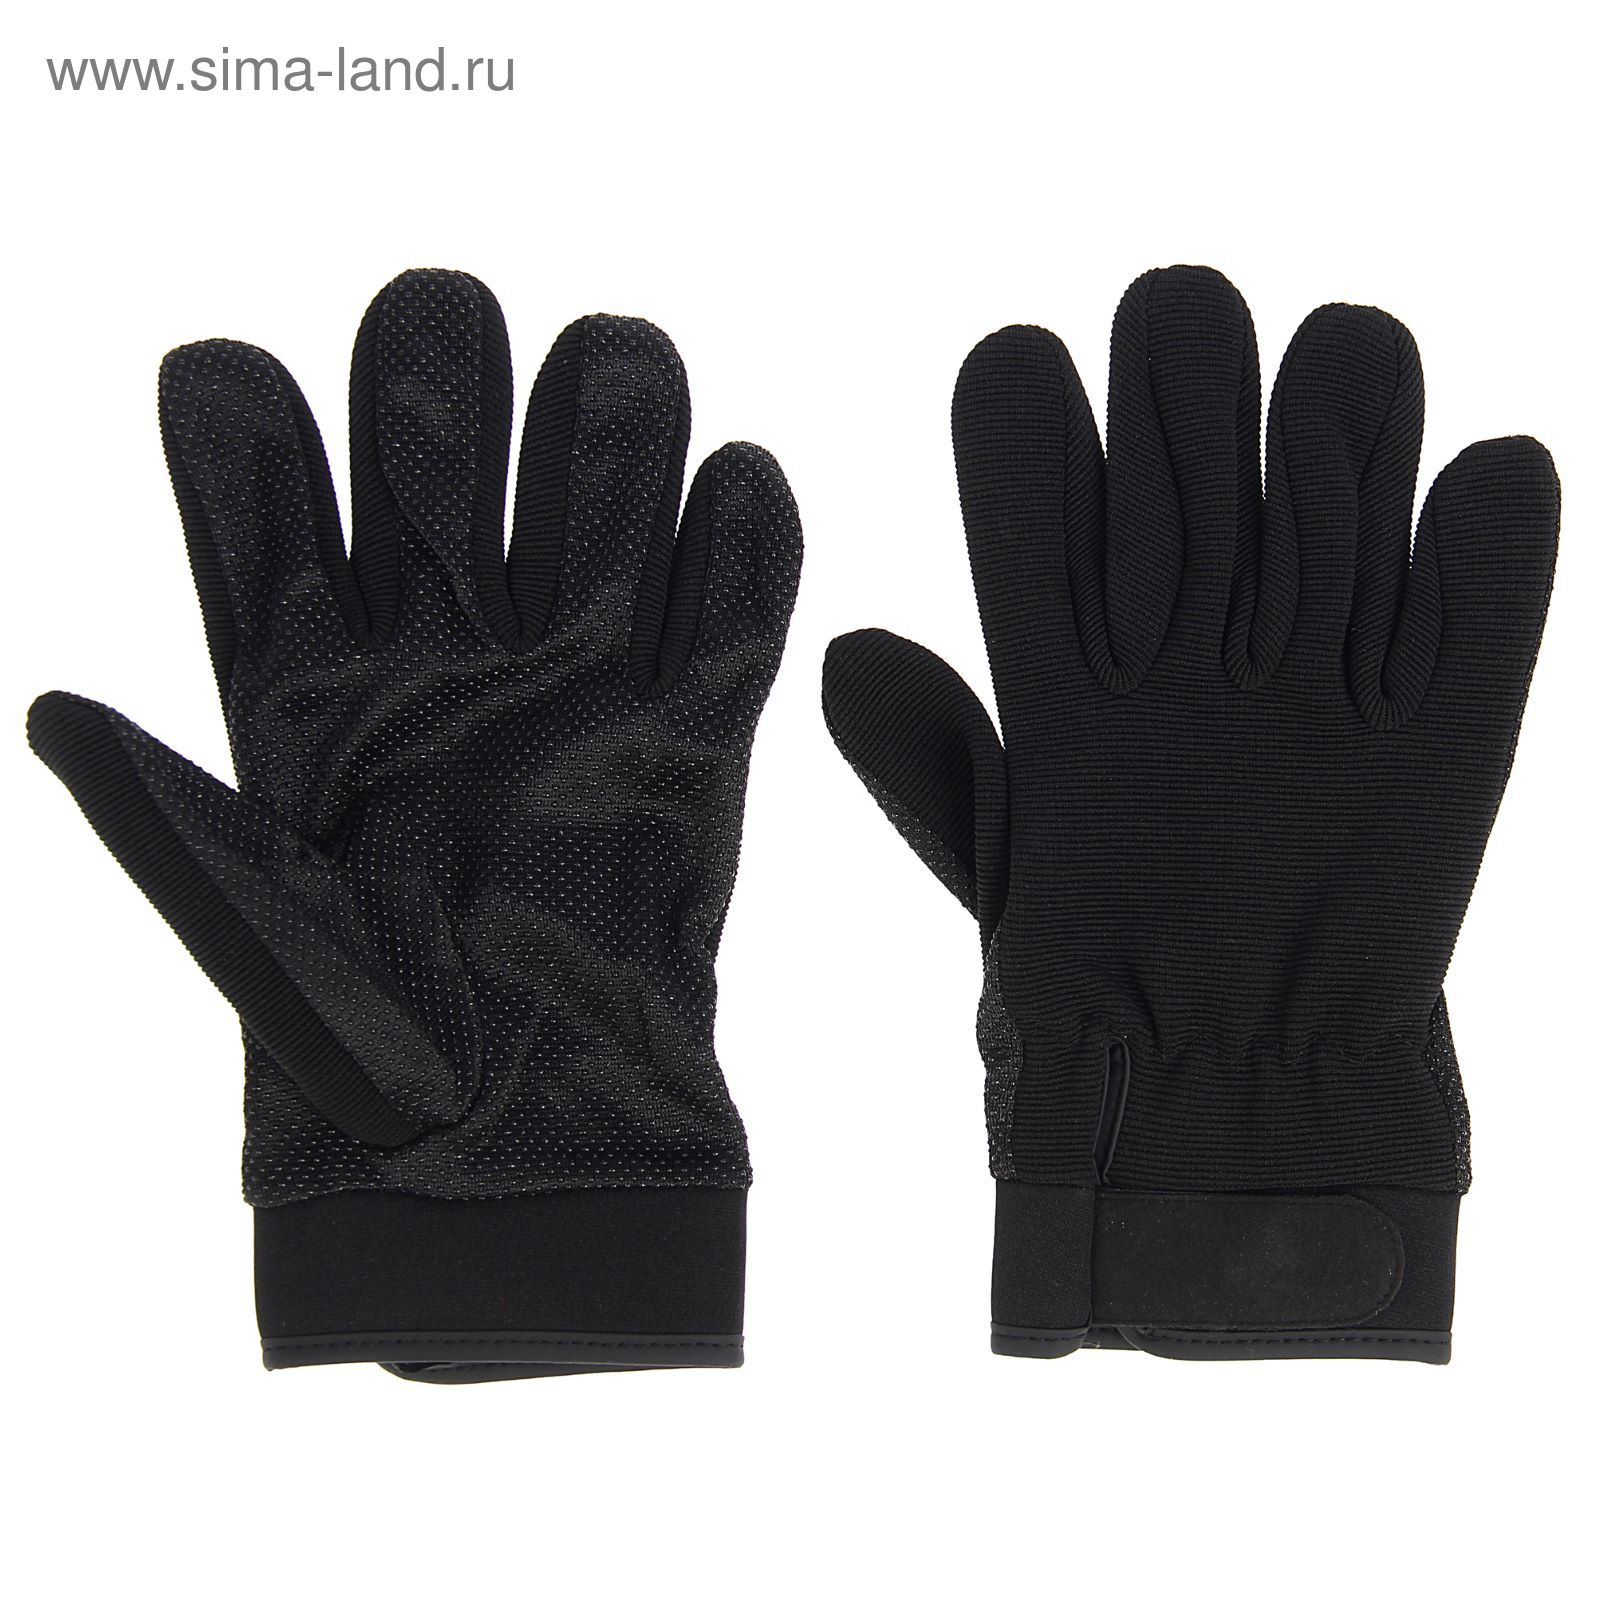 Перчатки GL612, микрофибра, размер L, black